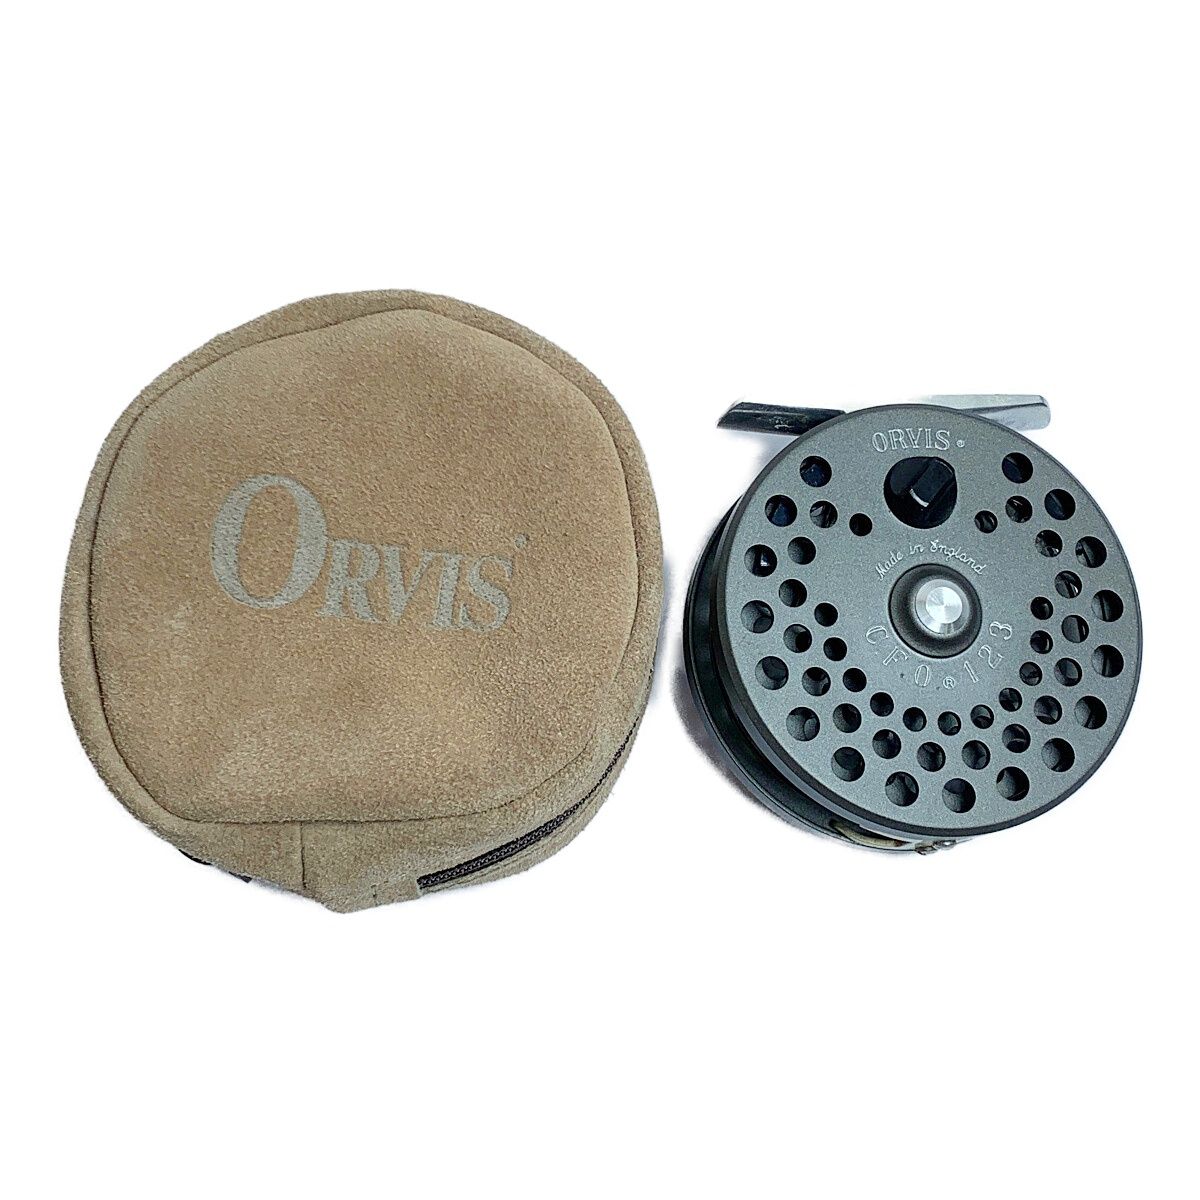 ORVIS CFO III Classic (Made in England)